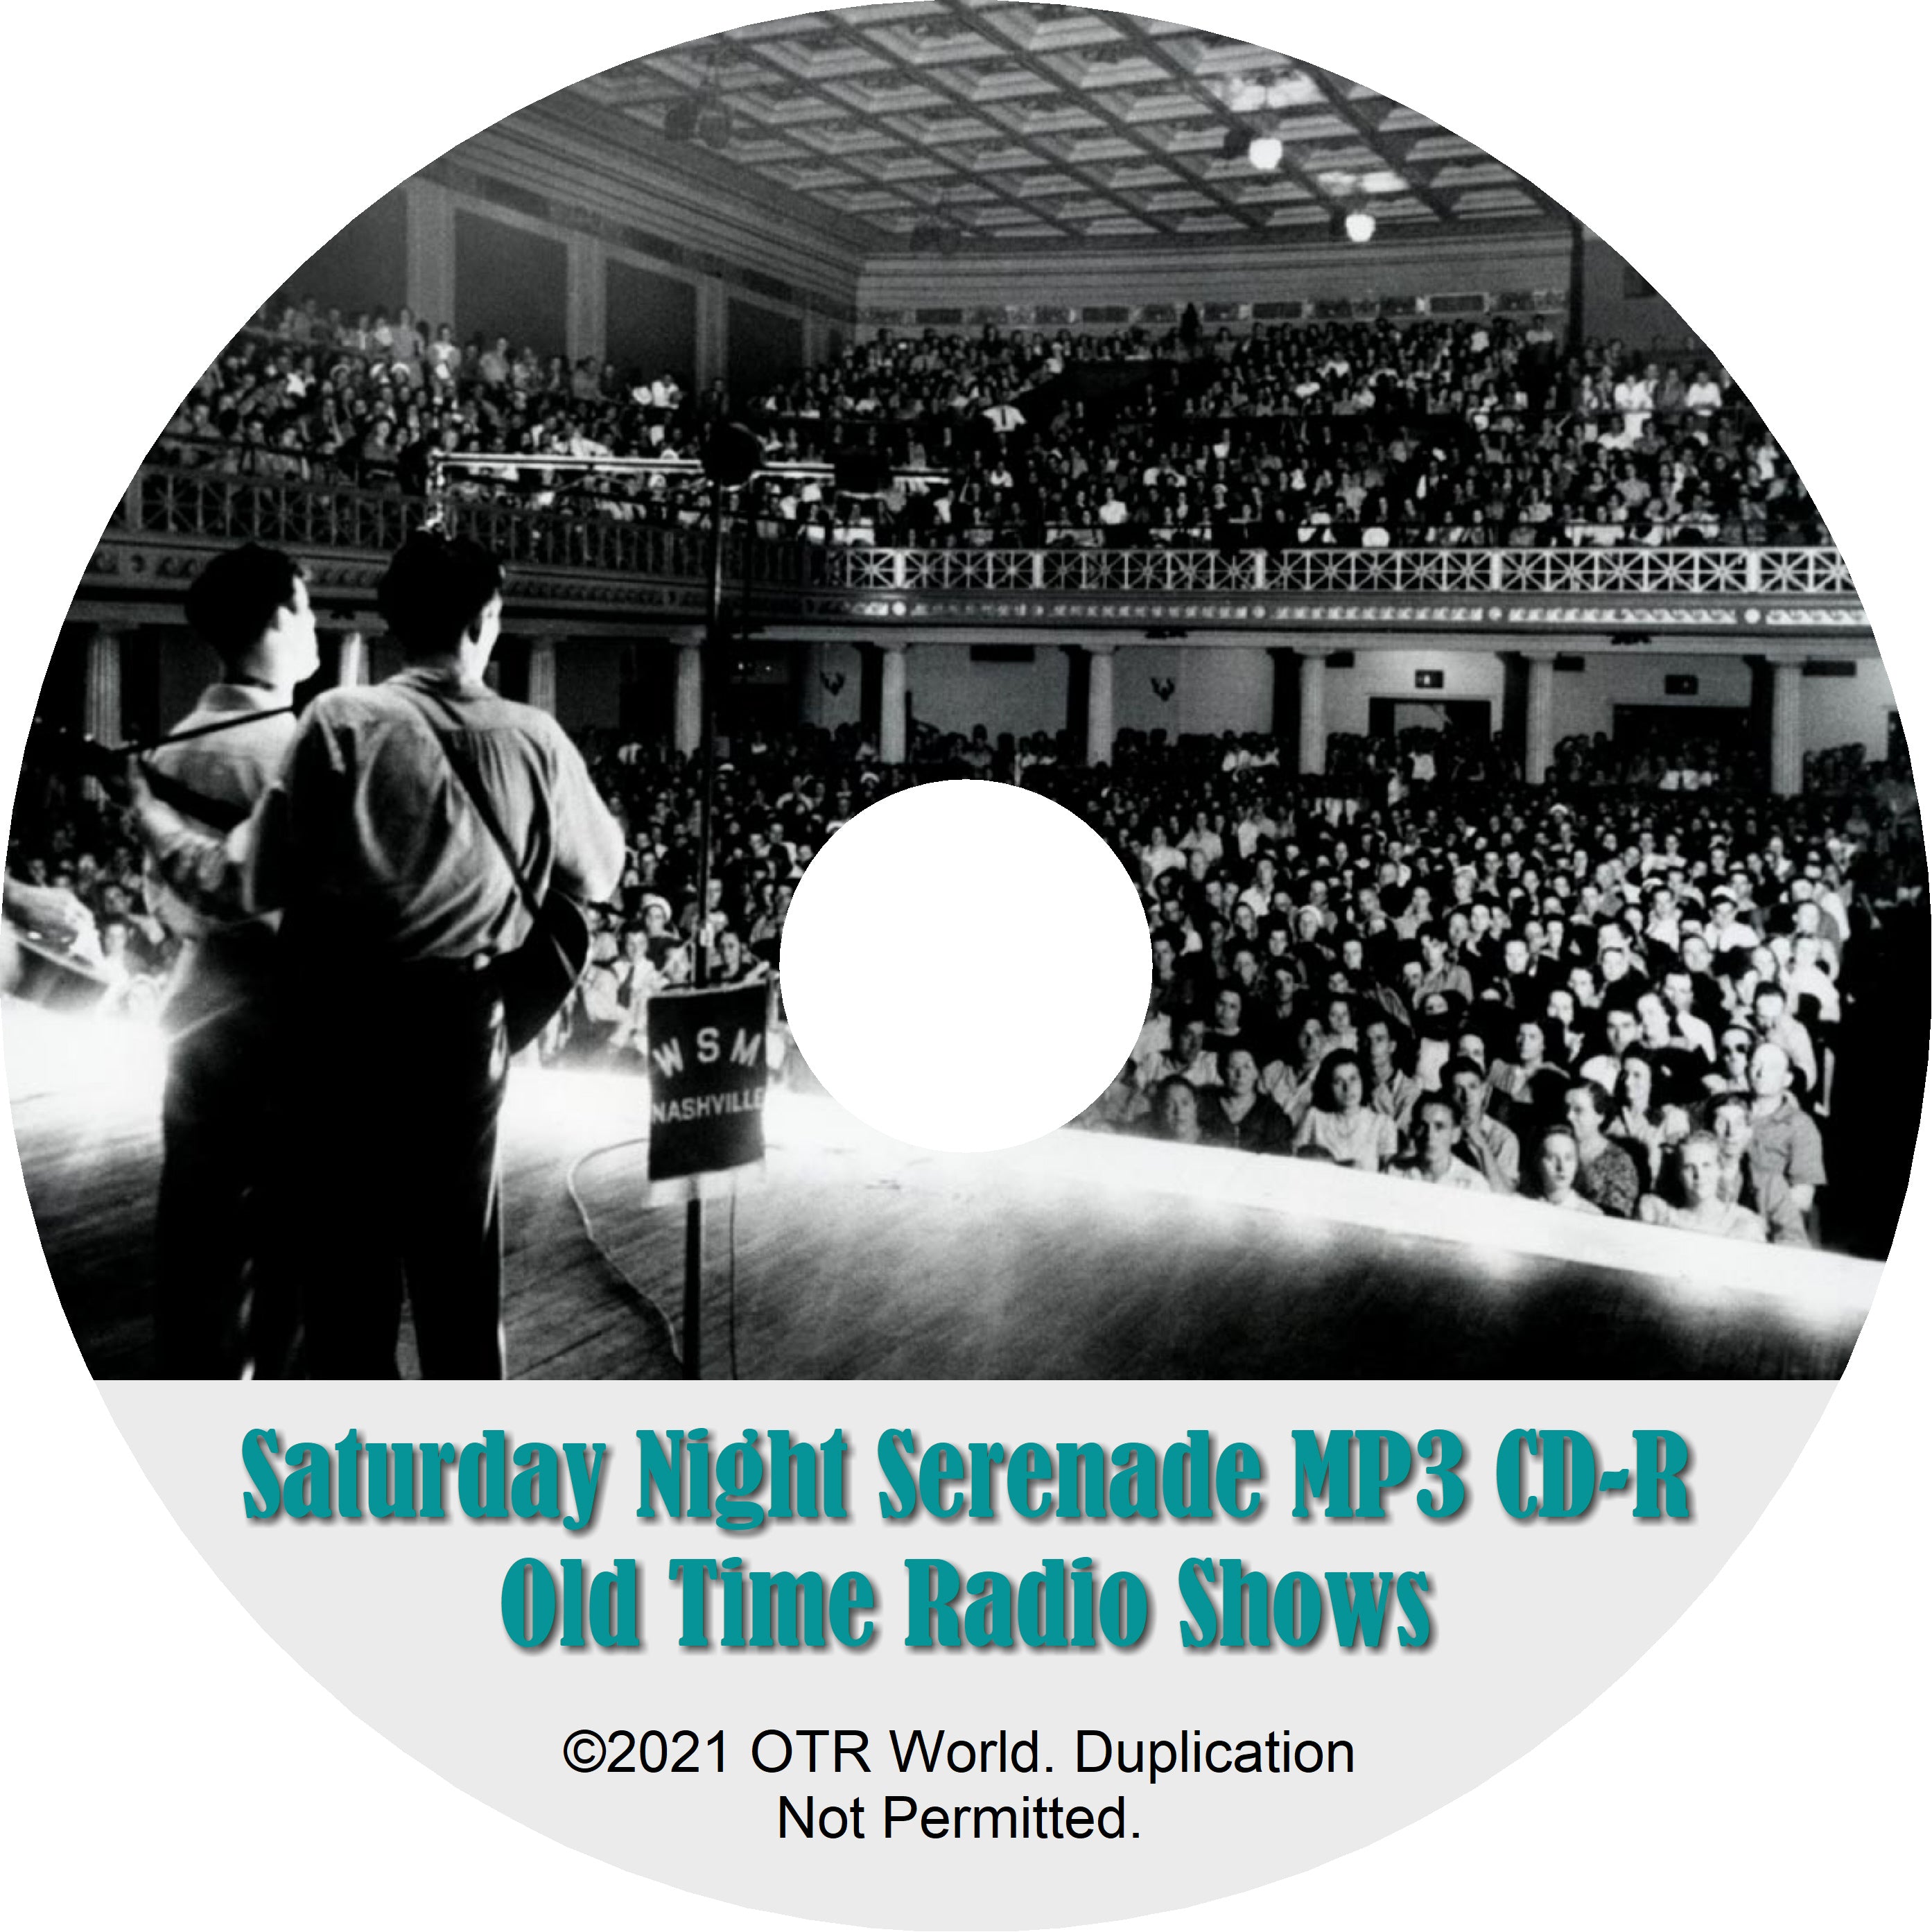 Saturday Night Serenade OTRS OTR Old Time Radio Shows MP3 On CD-R 6 Episodes